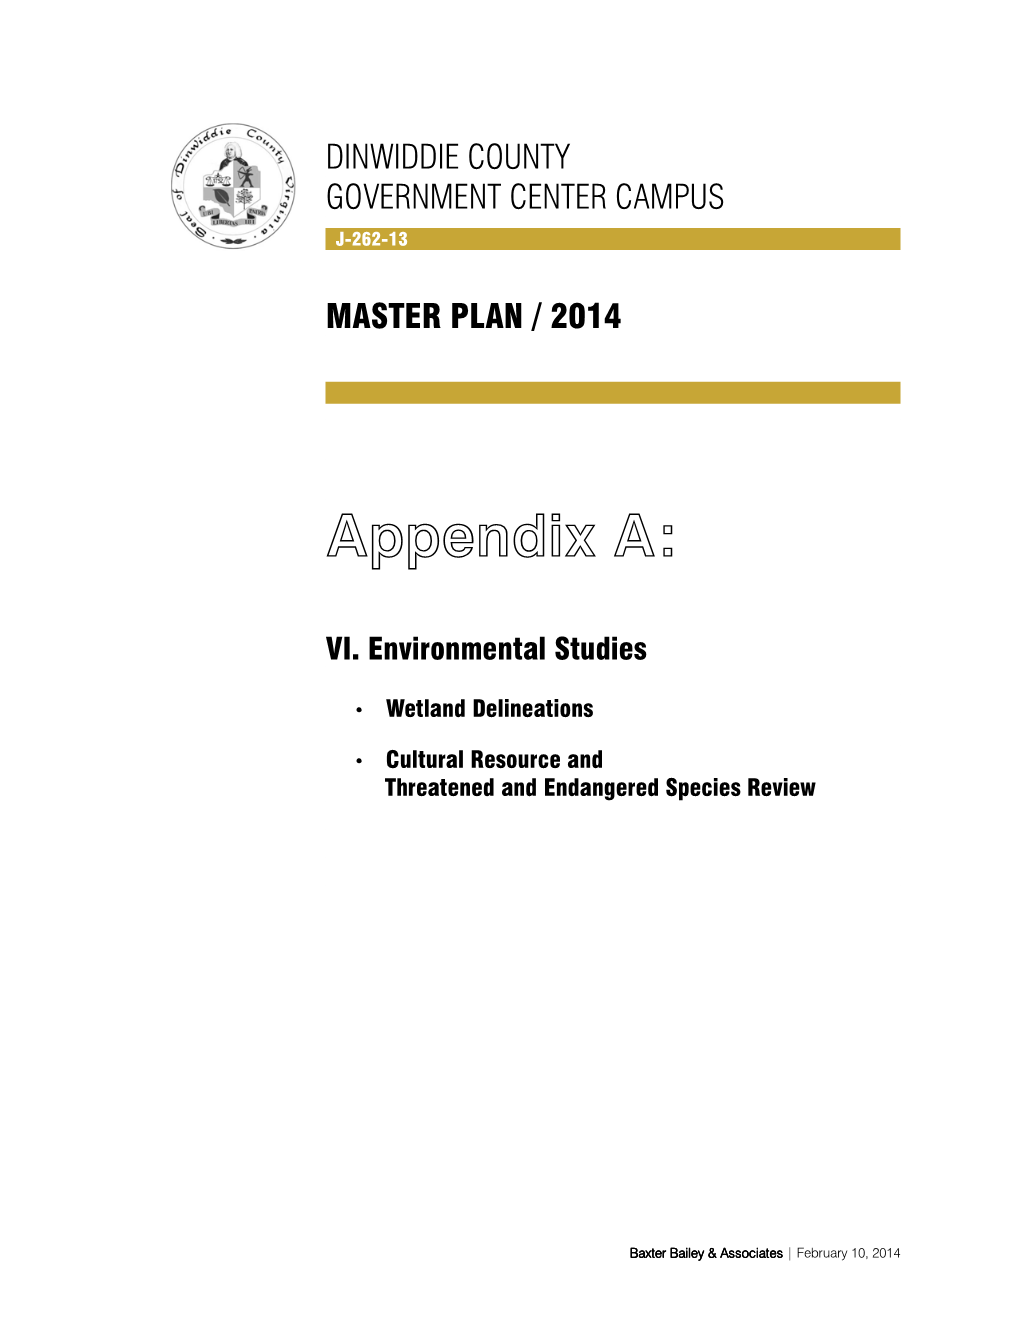 Appendix-Cover Master Plan Report